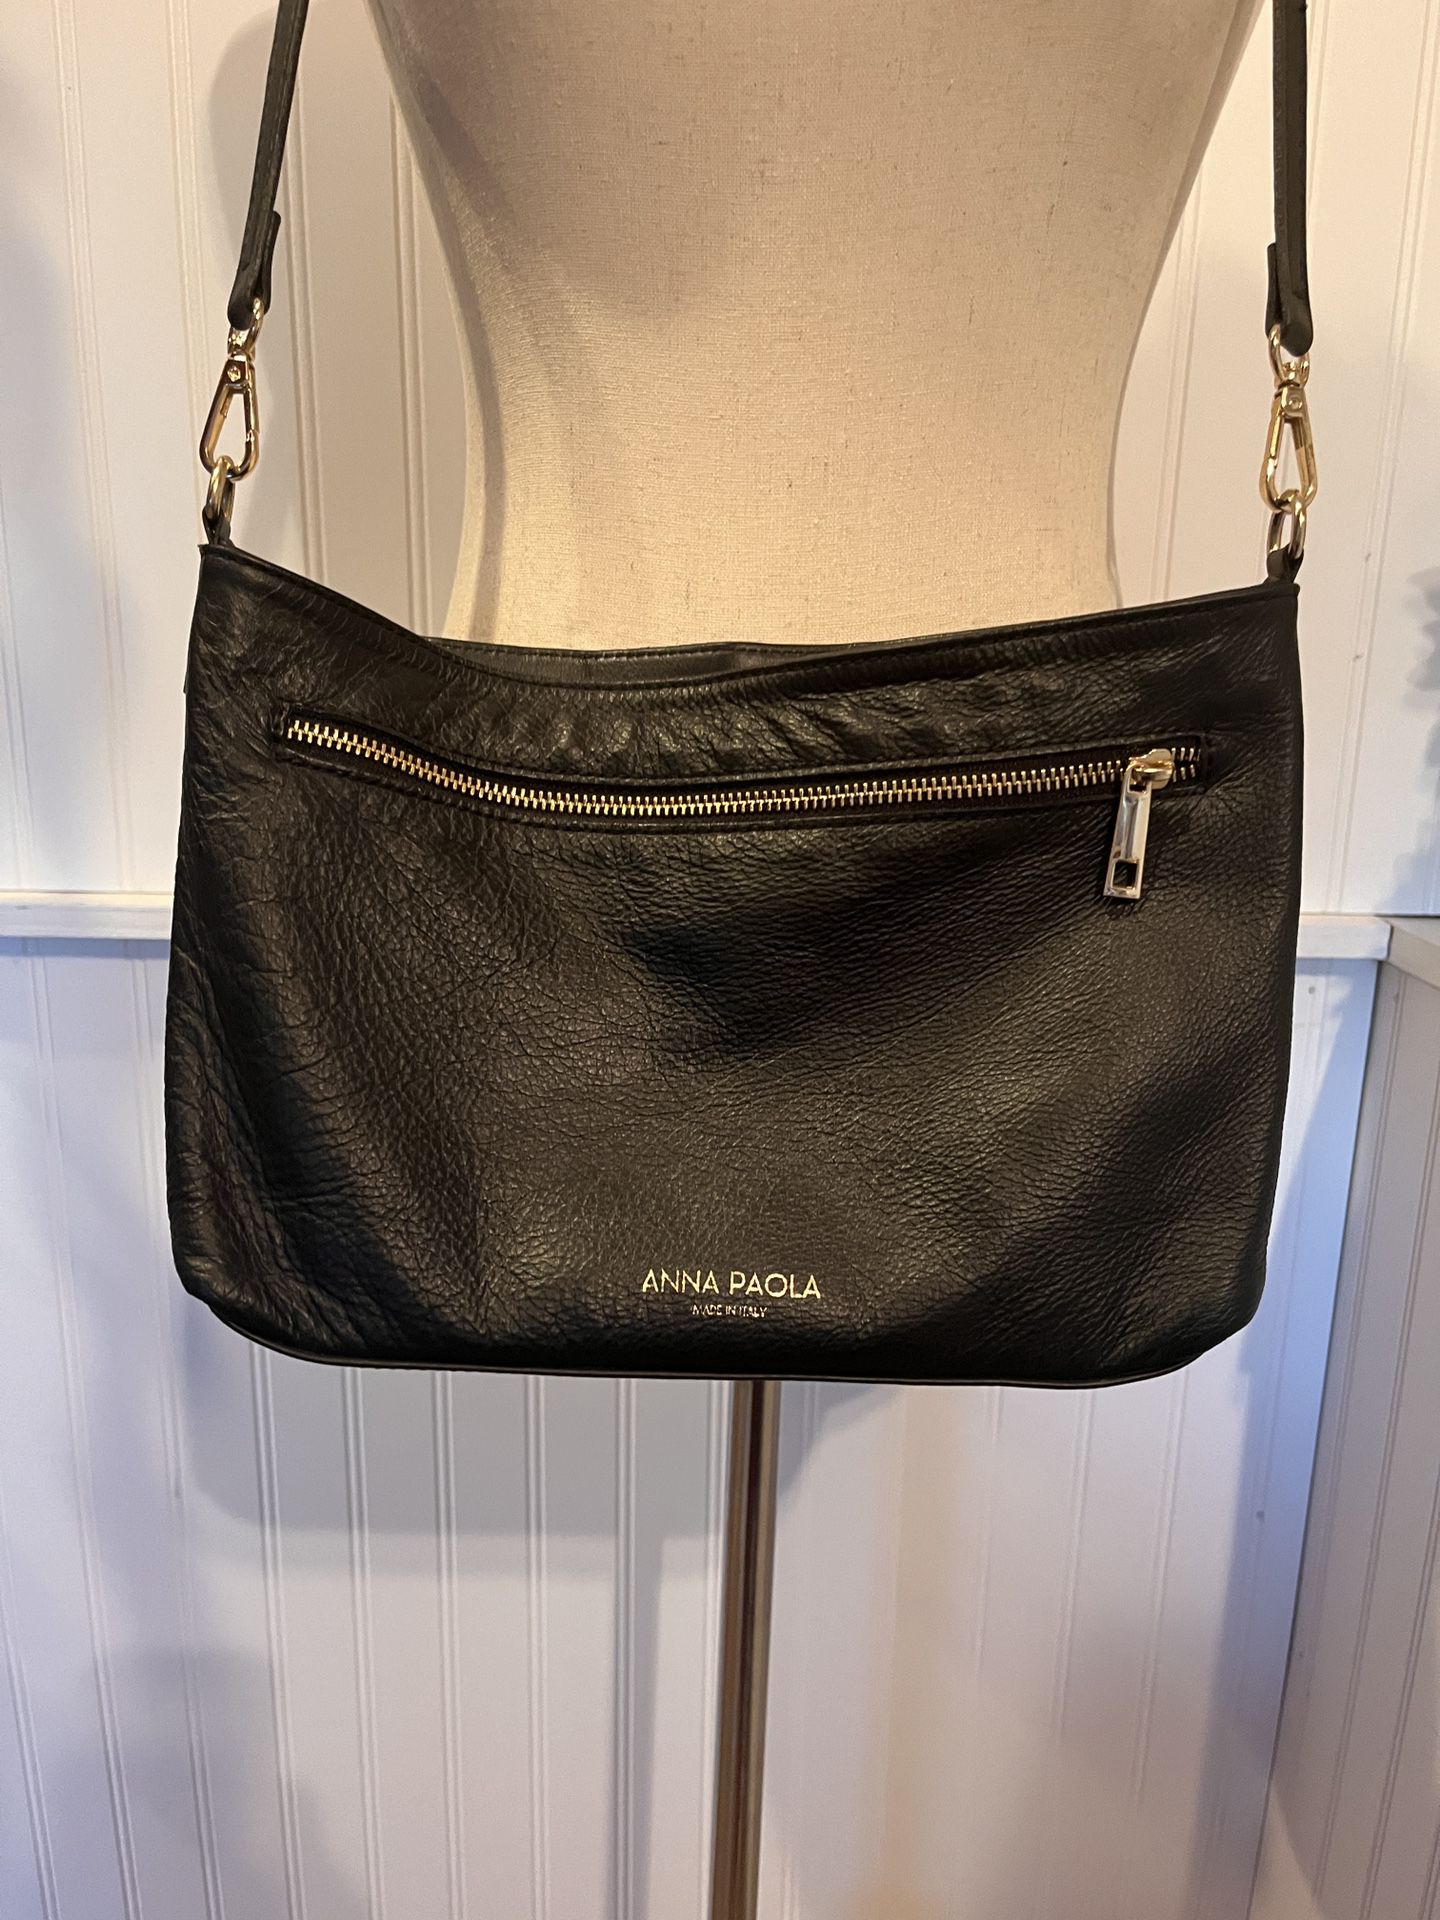 Anna Paola Black Leather Crossbody Shoulder Bag.